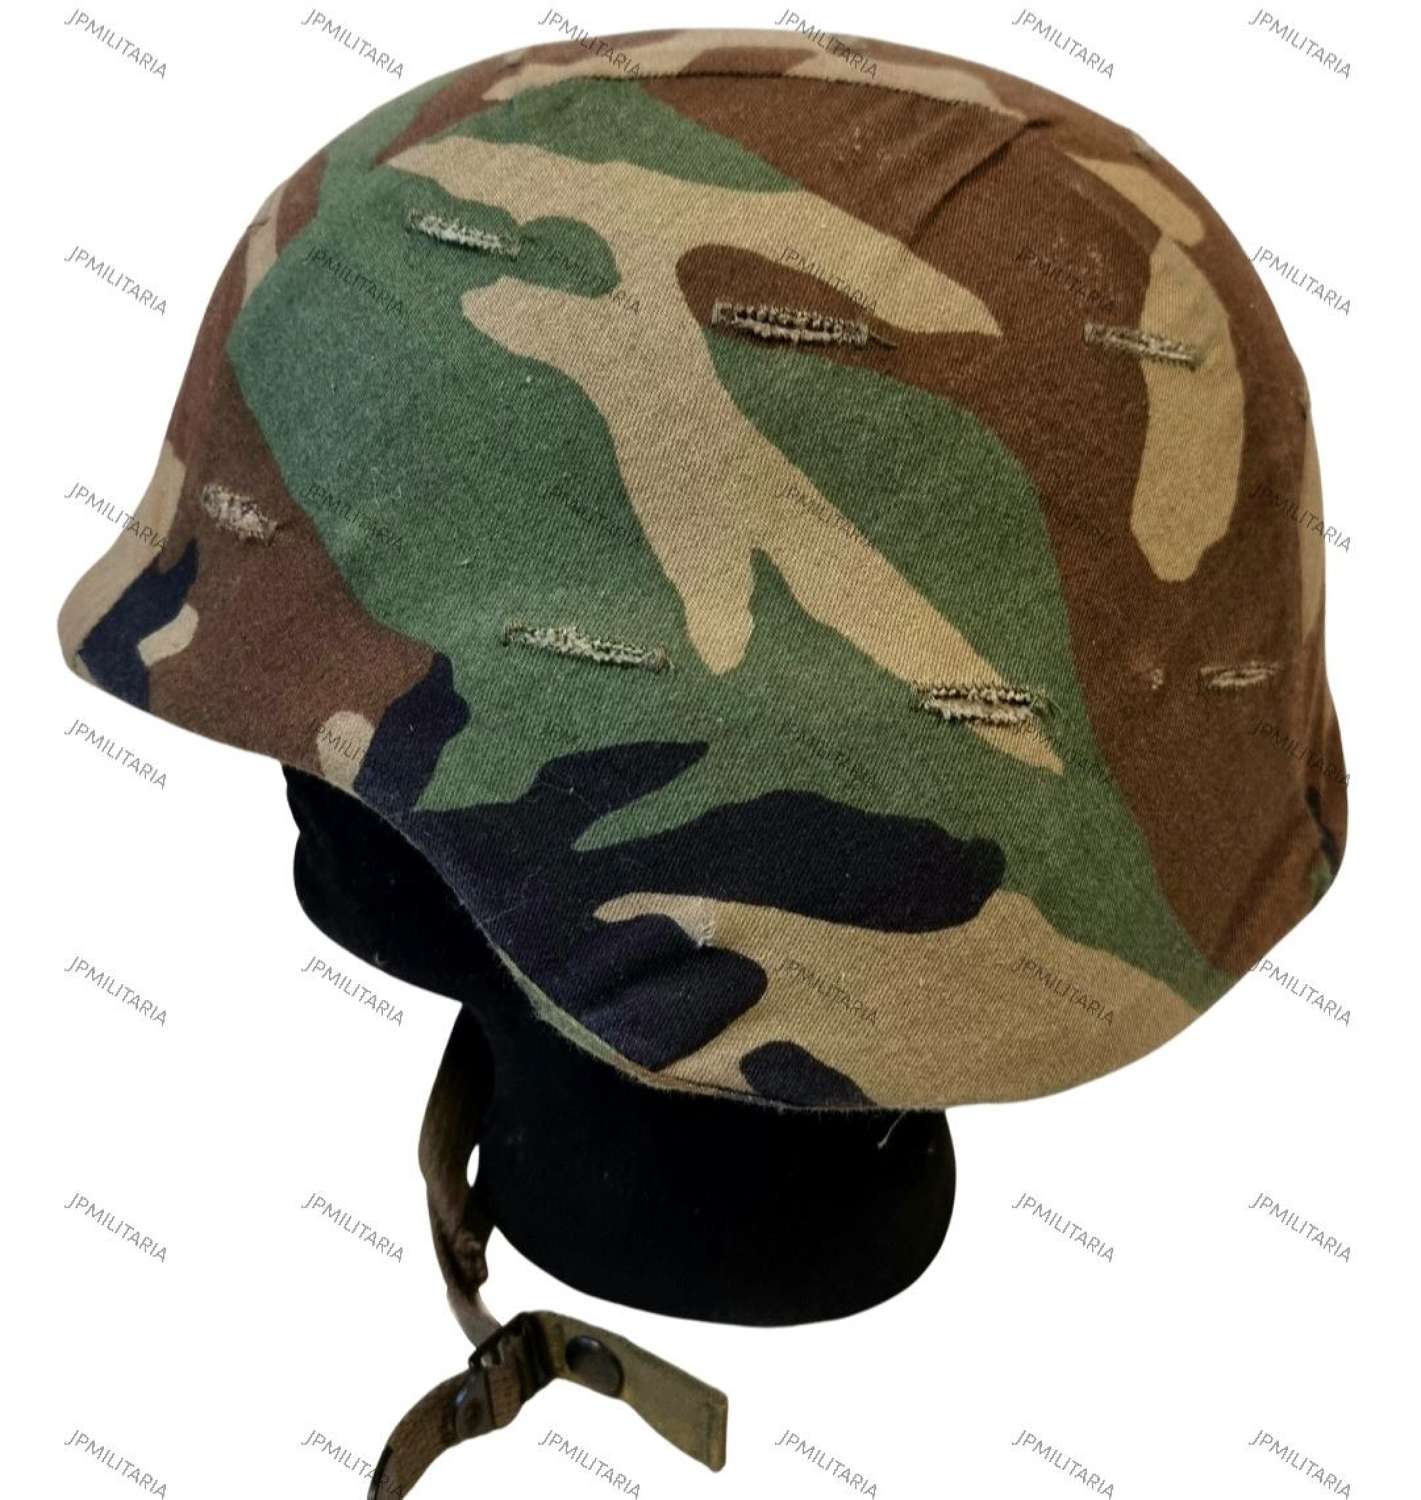 U.S PASGT Helmet